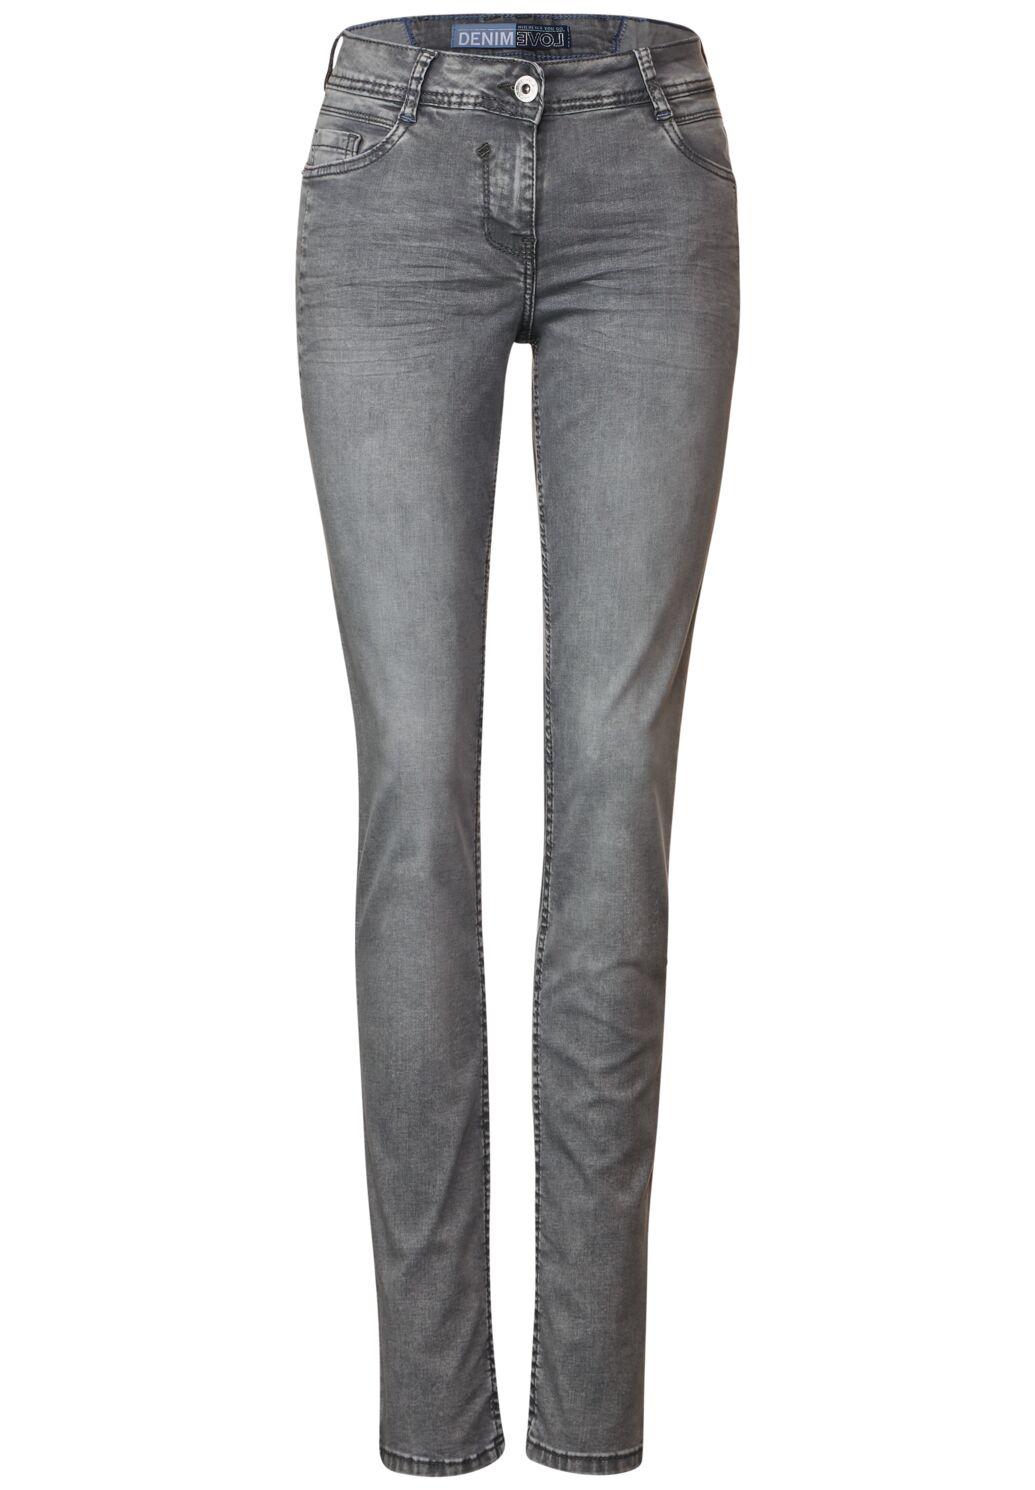 CECIL - Loose Fit Jeans Hose Style Scarlett grau B376493-10272